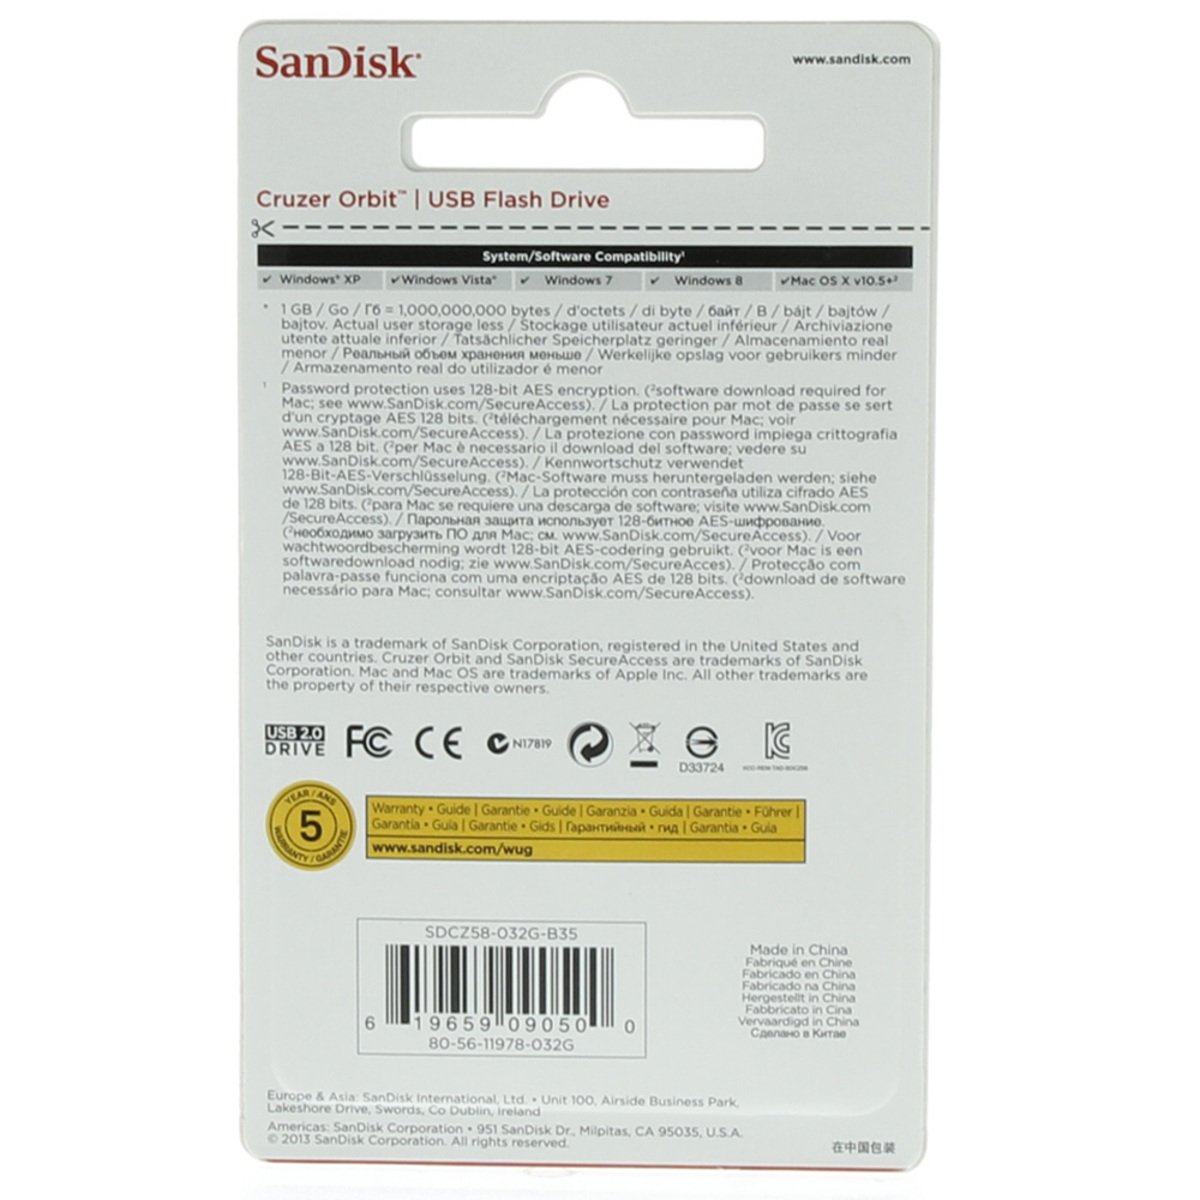 Sandisk FlashDrive CruzerOrbitSDCZ58 32GB